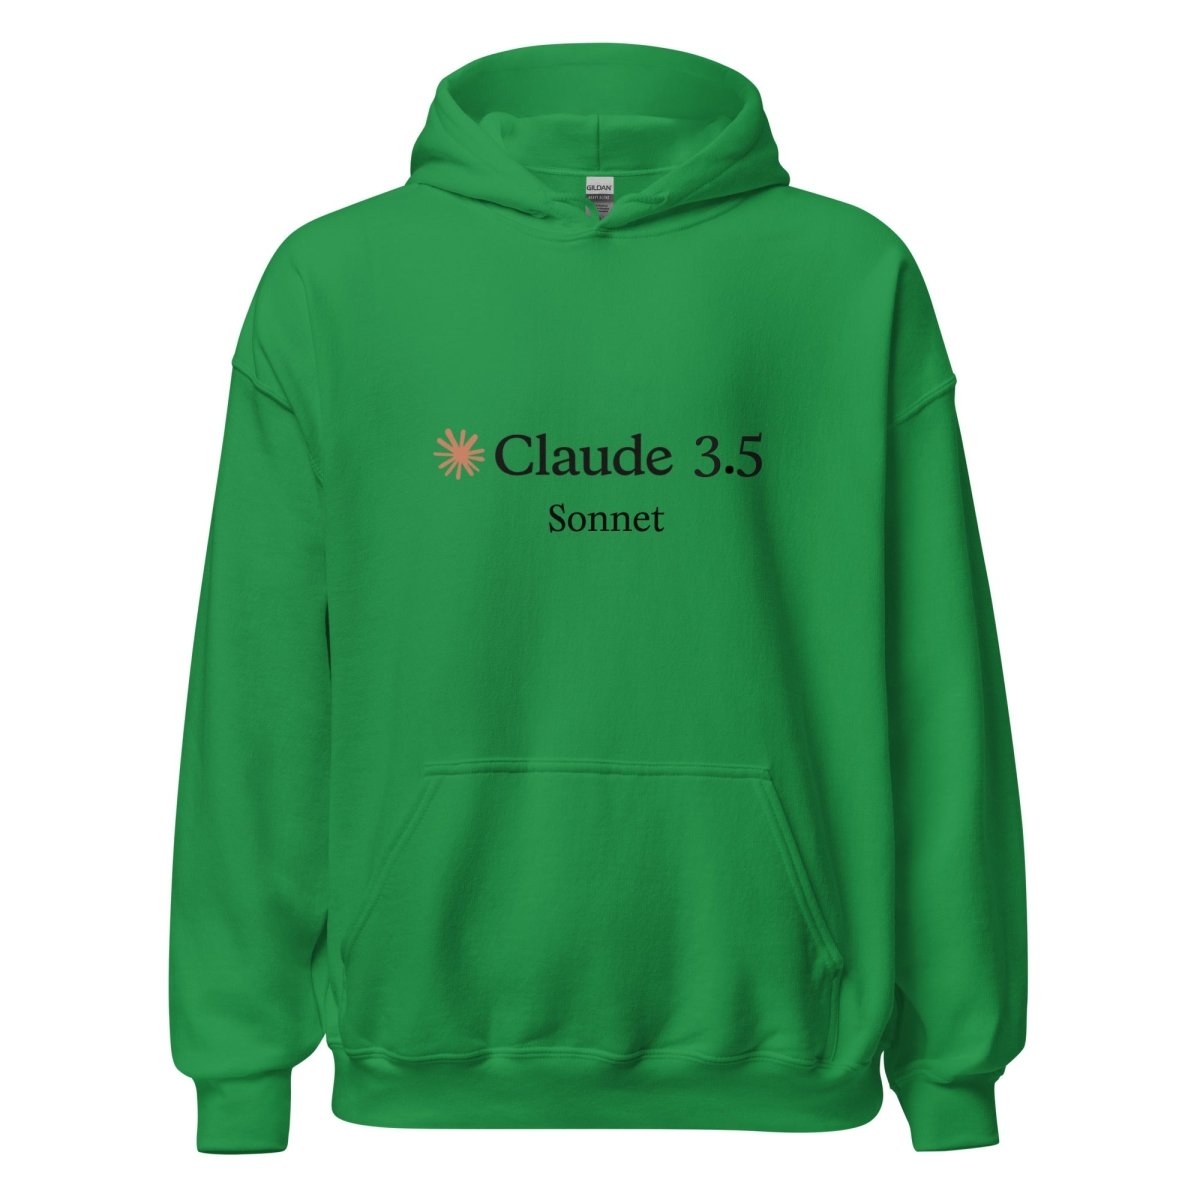 Claude 3.5 Sonnet Hoodie (unisex) - Irish Green - AI Store